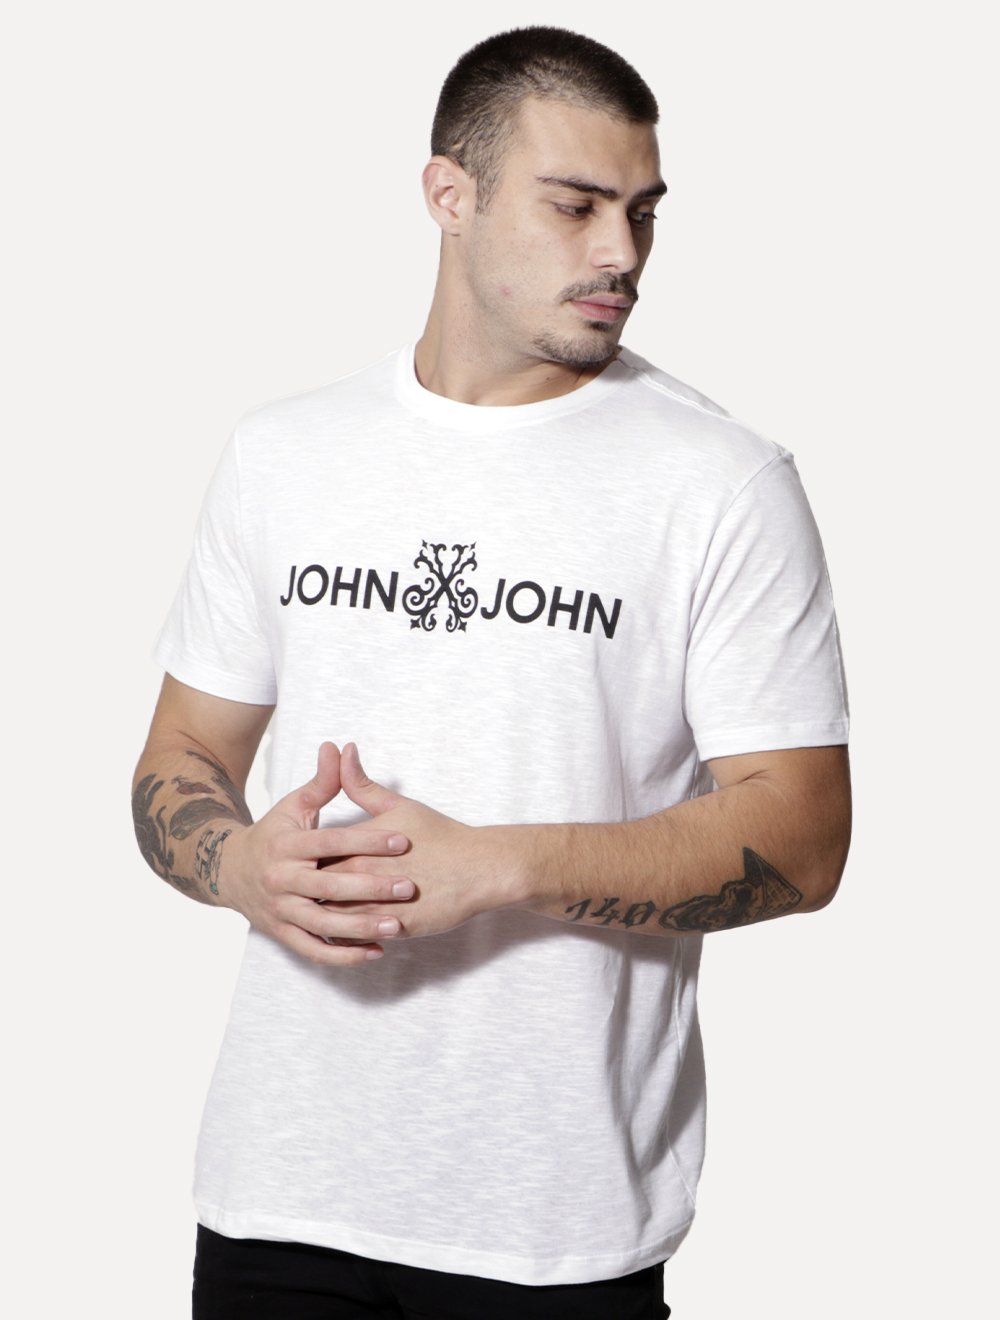 Camiseta John John Masculina Slim Eagle 006 Cinza Mescla - Cinza